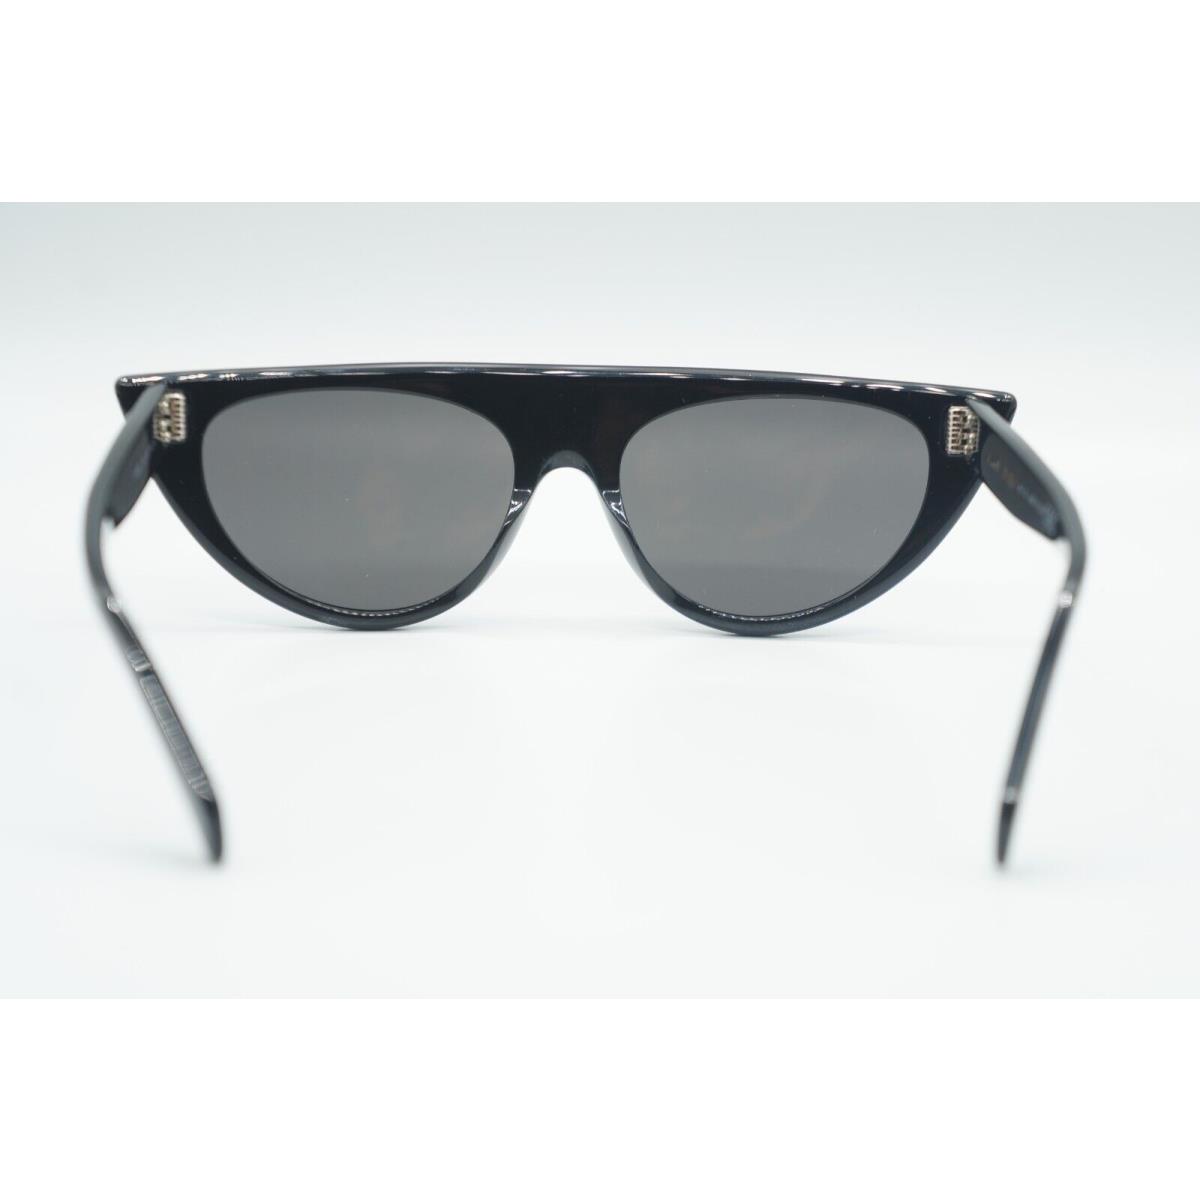 Celine eyeglasses  - Frame: Black 3